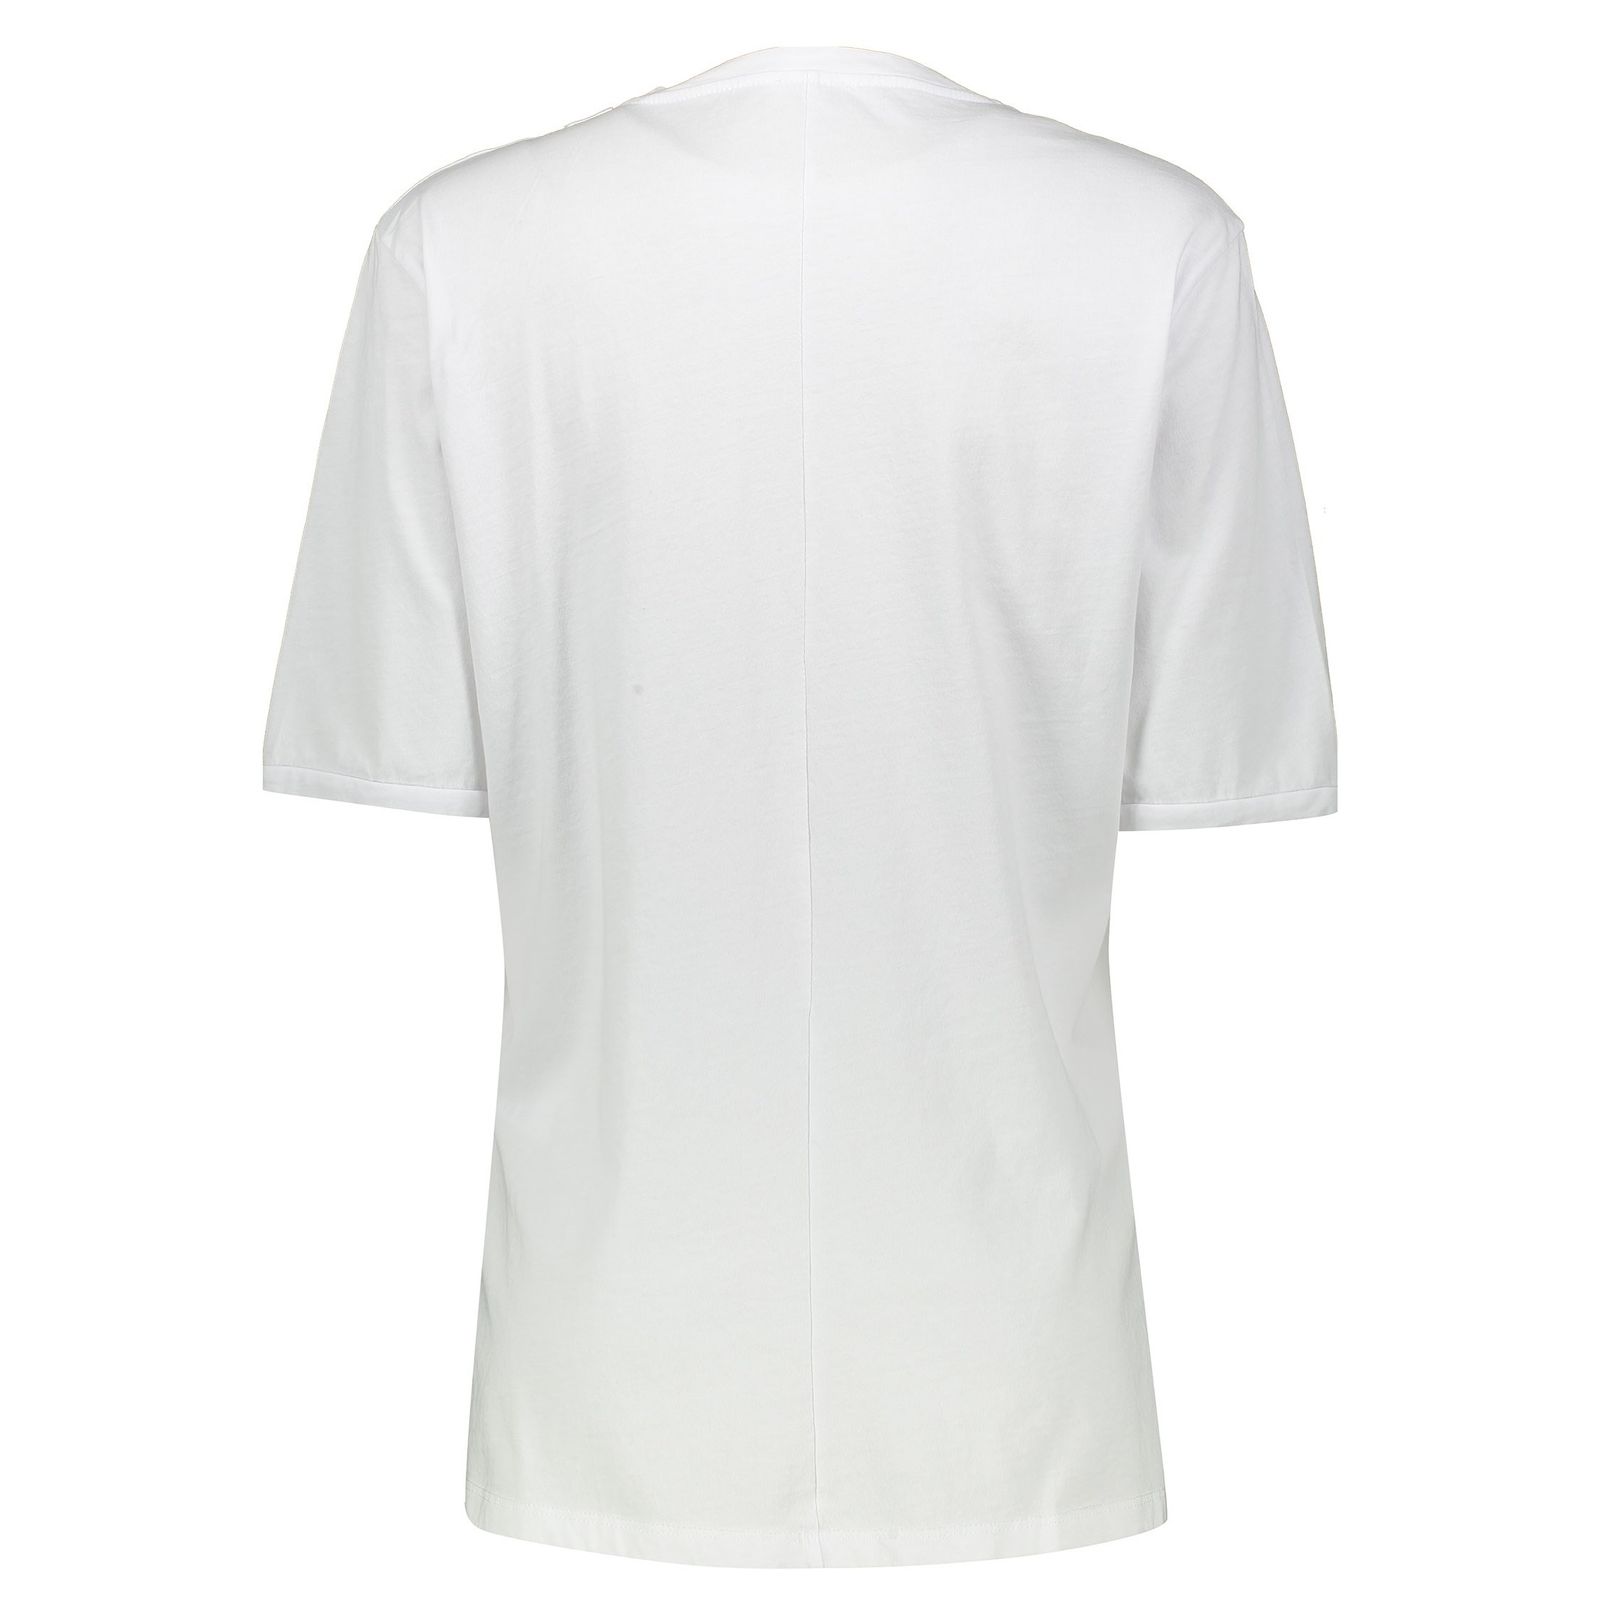 تی شرت نخی یقه گرد مردانه - امپریال - سفيد - 3